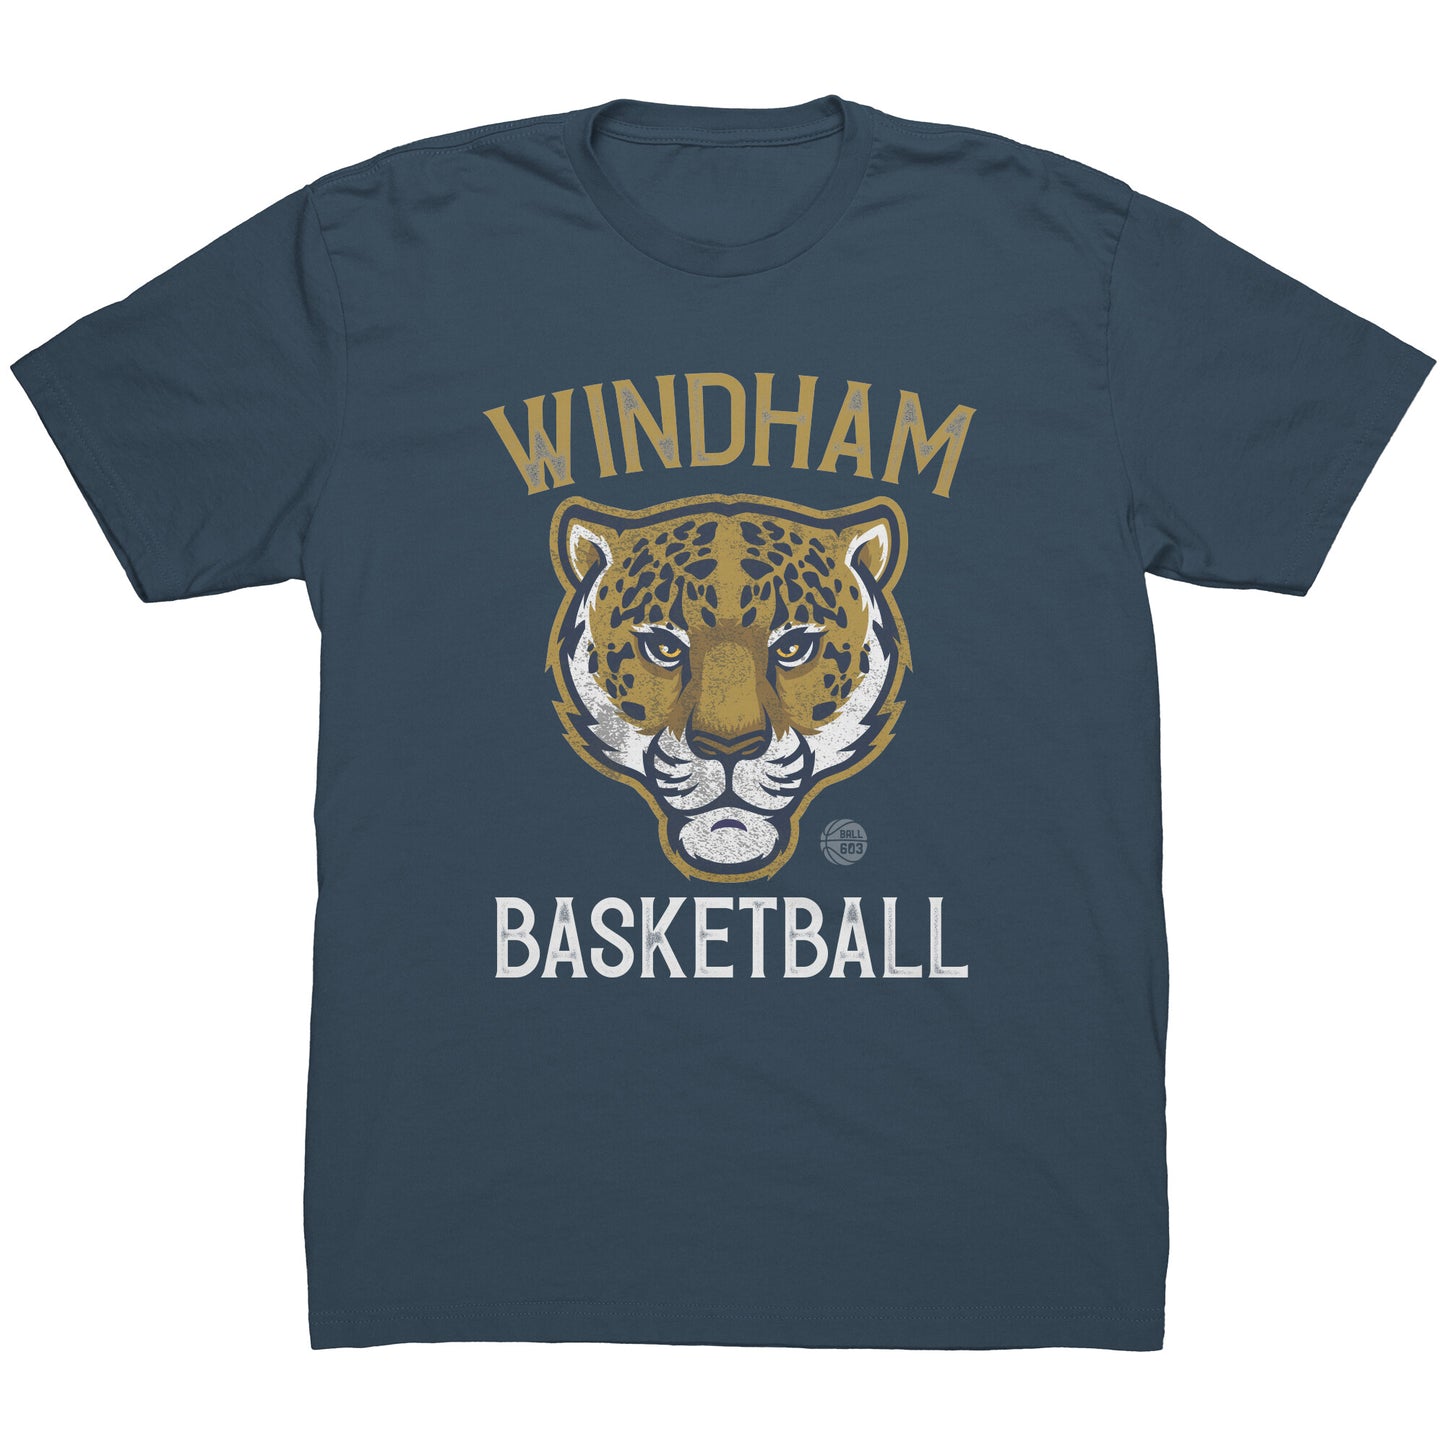 Windham Basketball (Men's Cut)